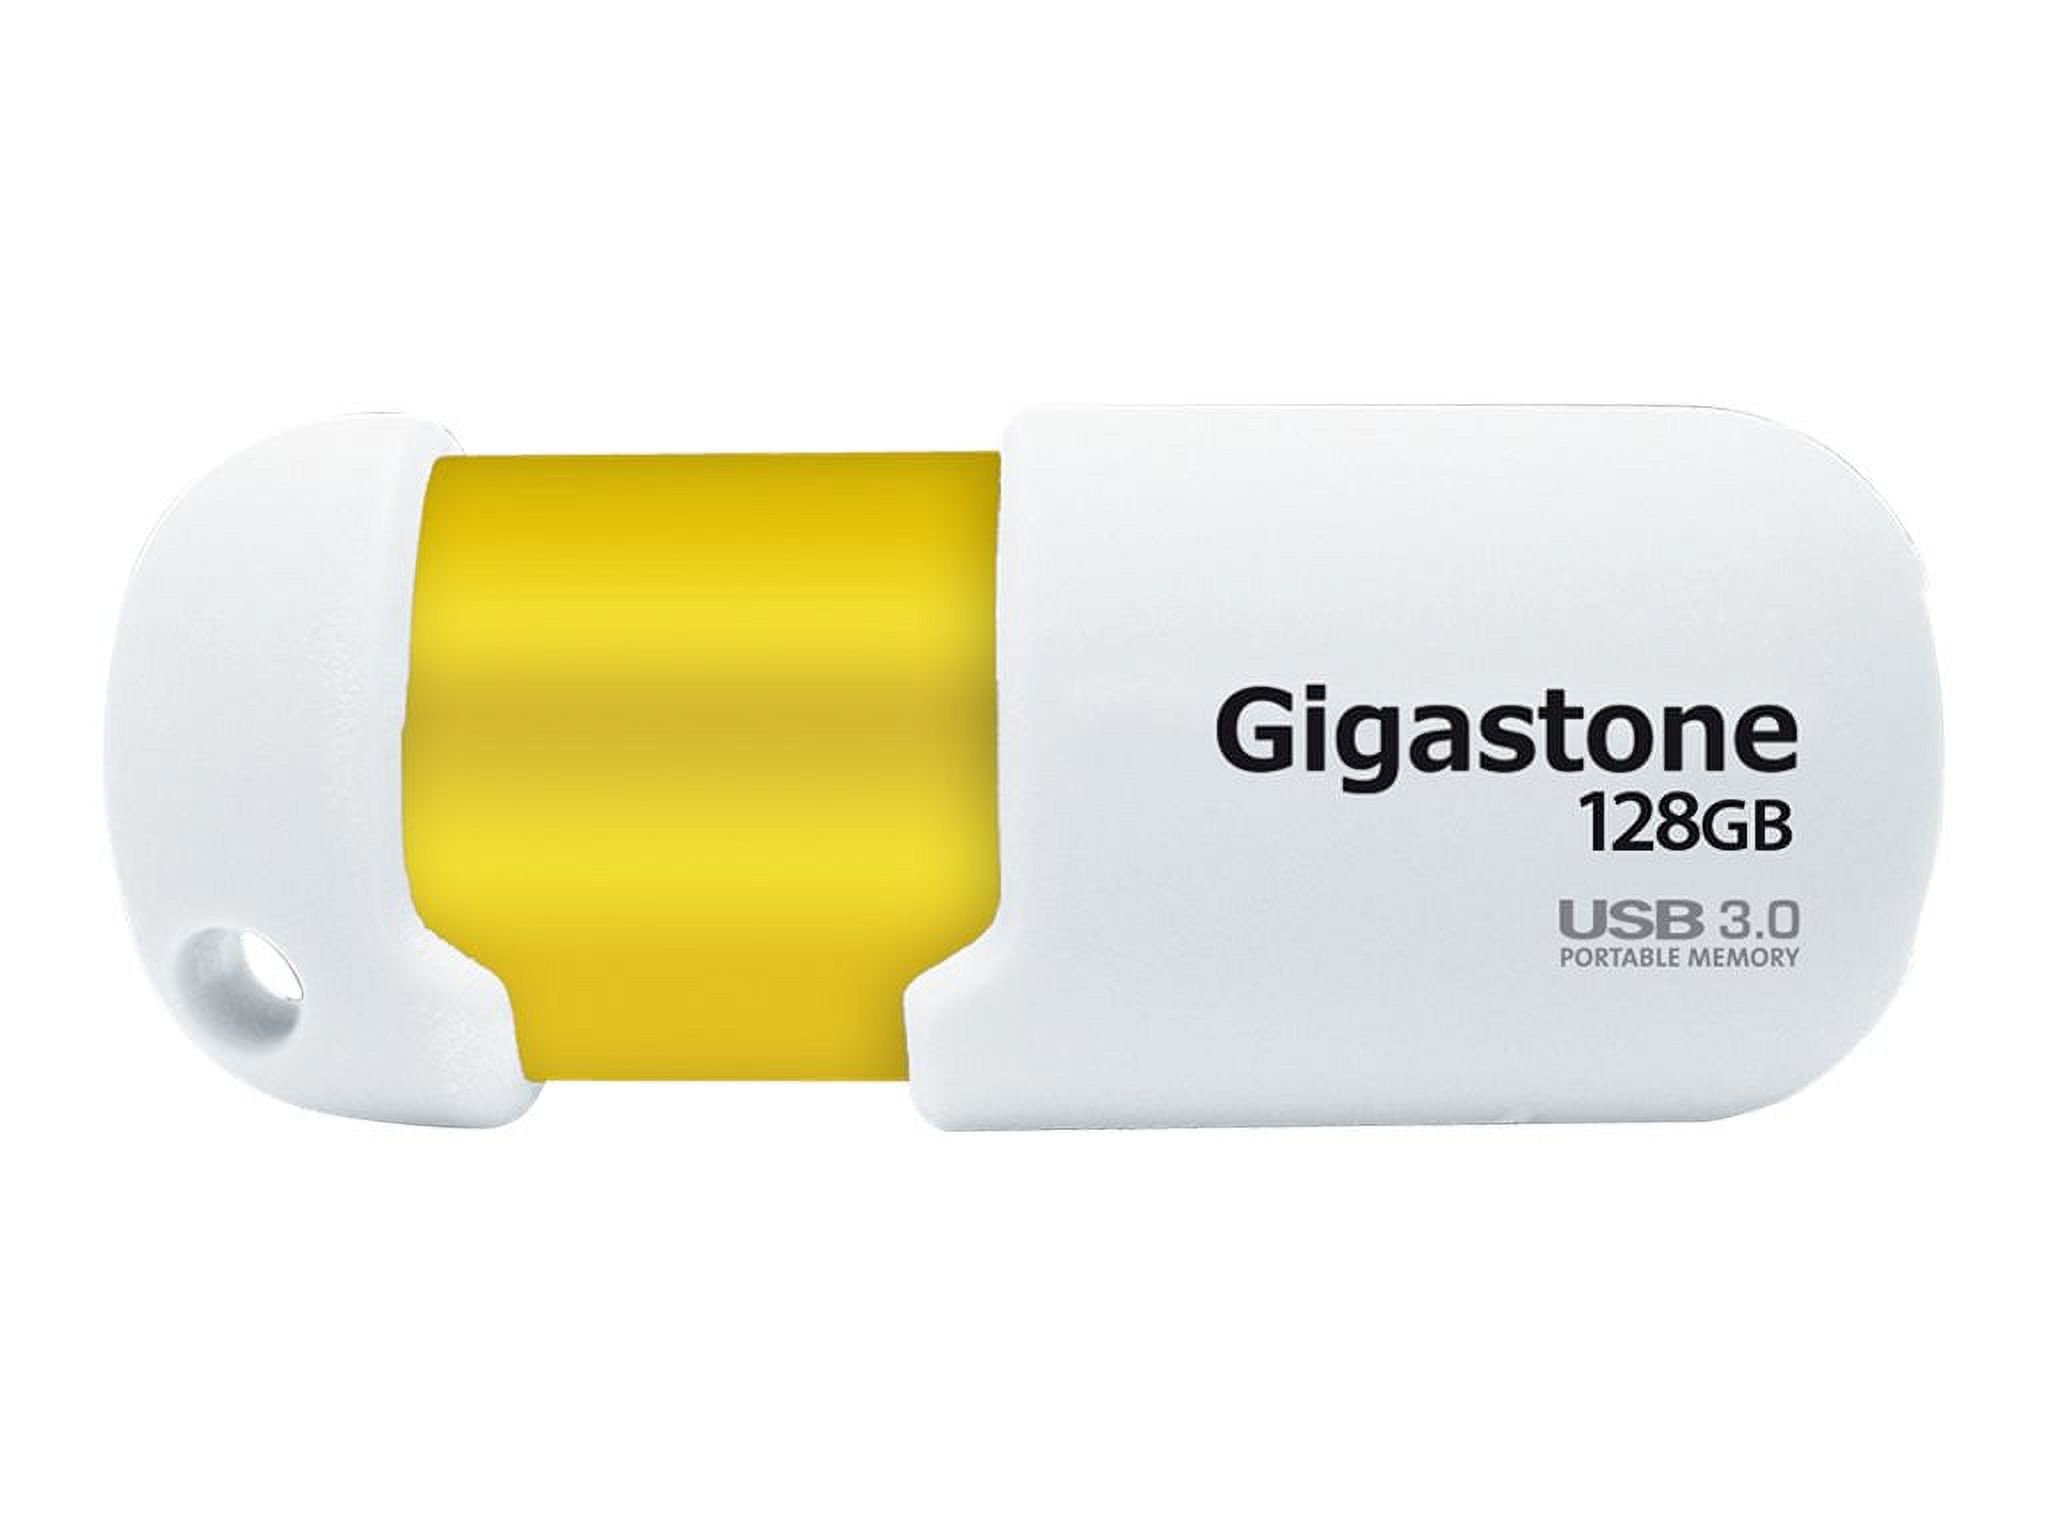 Gigastone - USB flash drive - 128 GB - USB 3.0 - white, gold - image 1 of 2